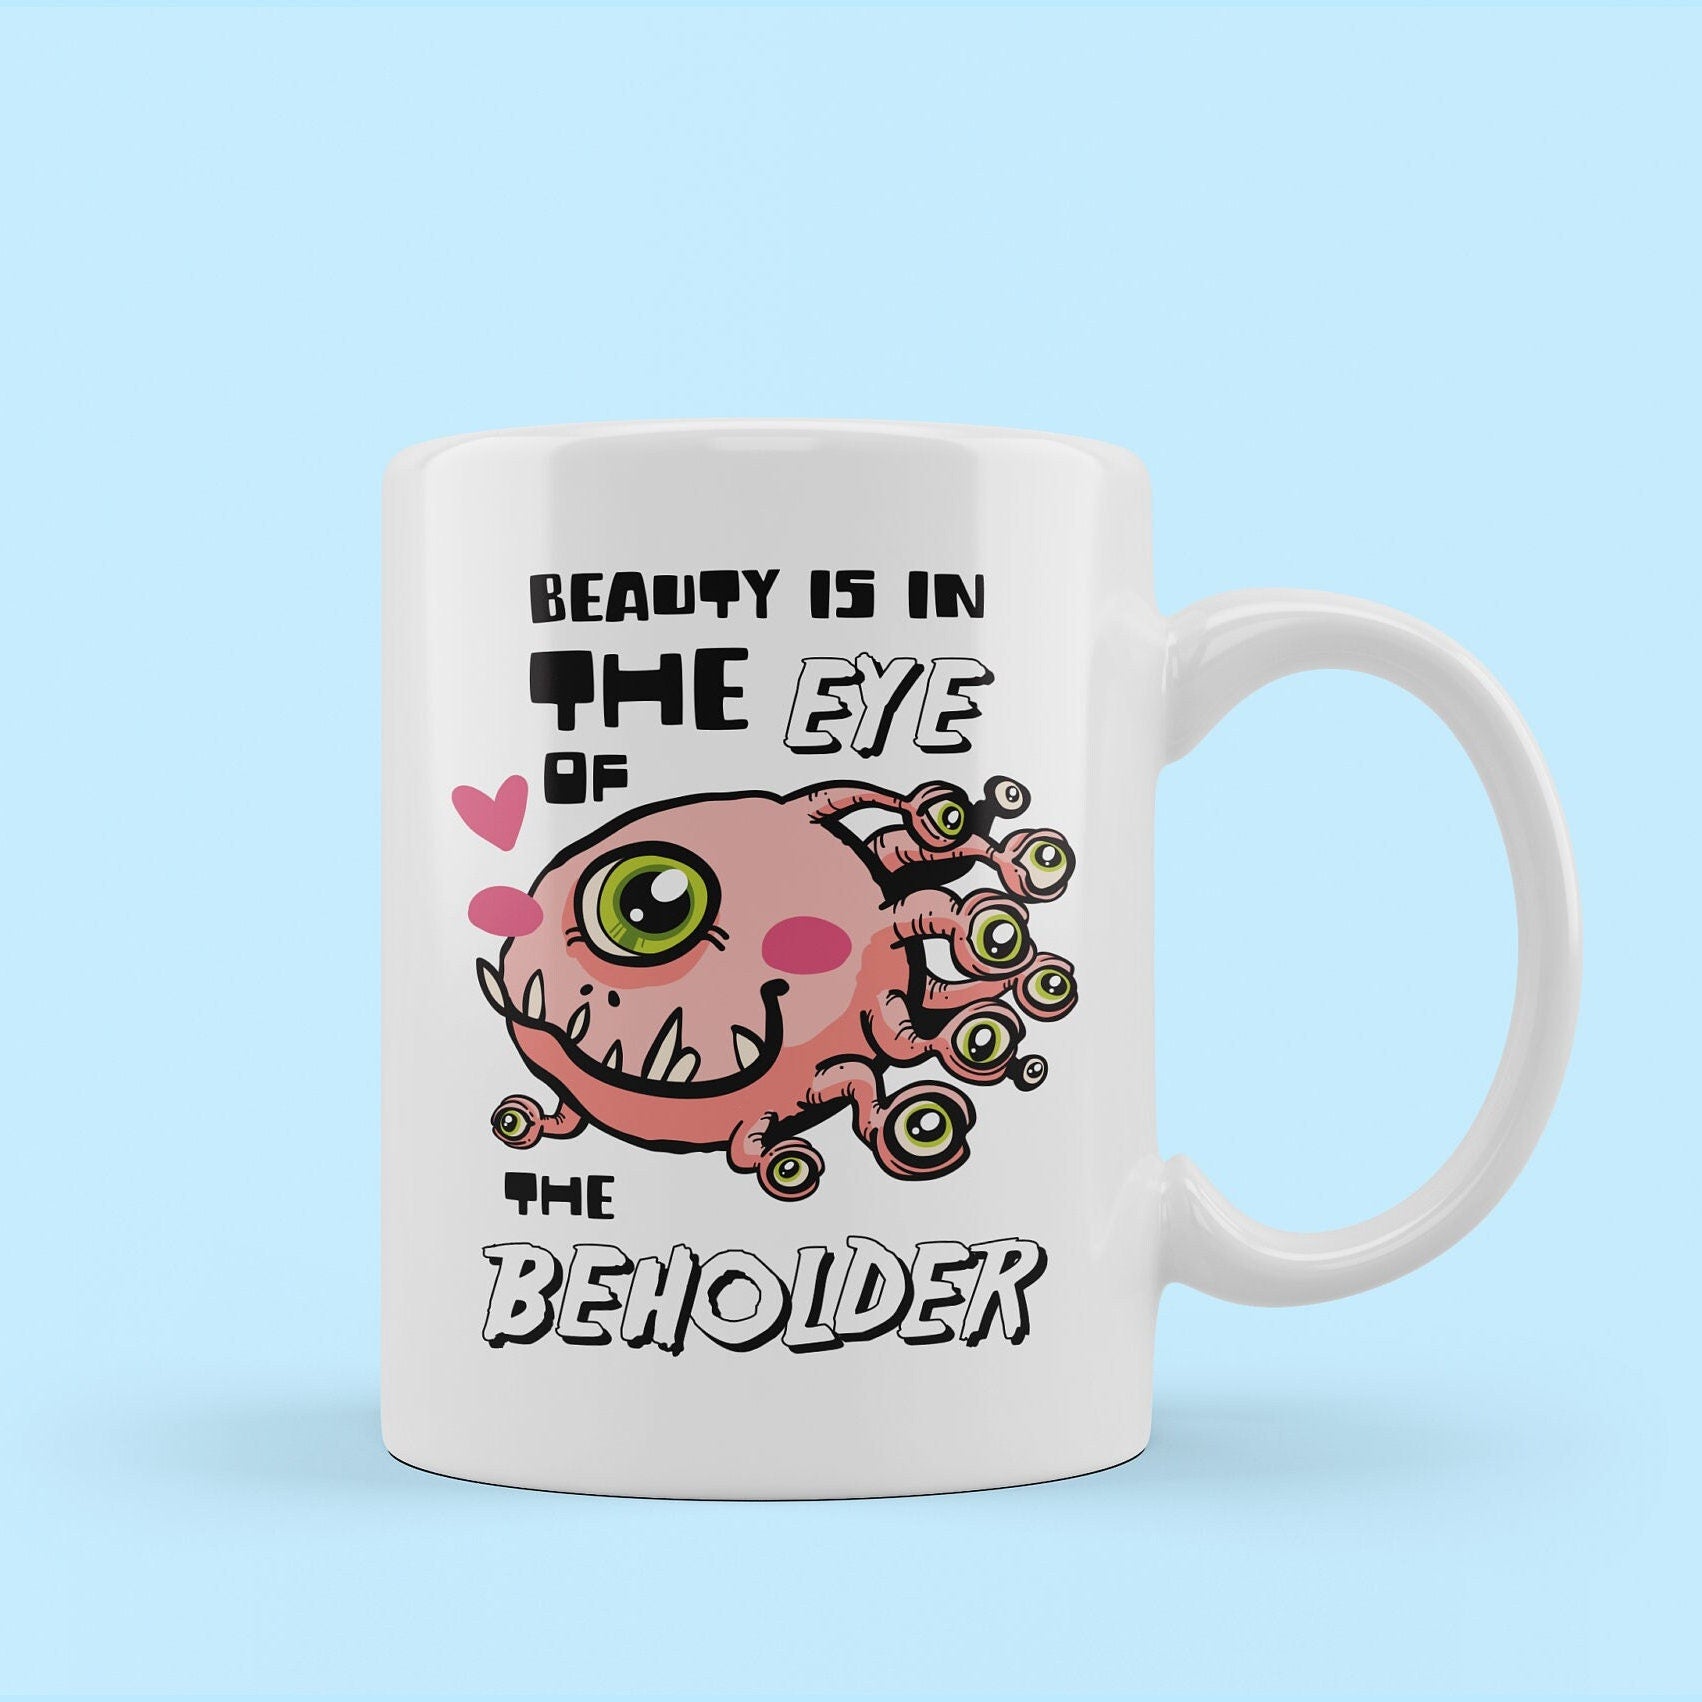 dungeons and dragons joke mug. funny dnd mug. gamer valentines gift mug. beauty is in the eye of the beholder